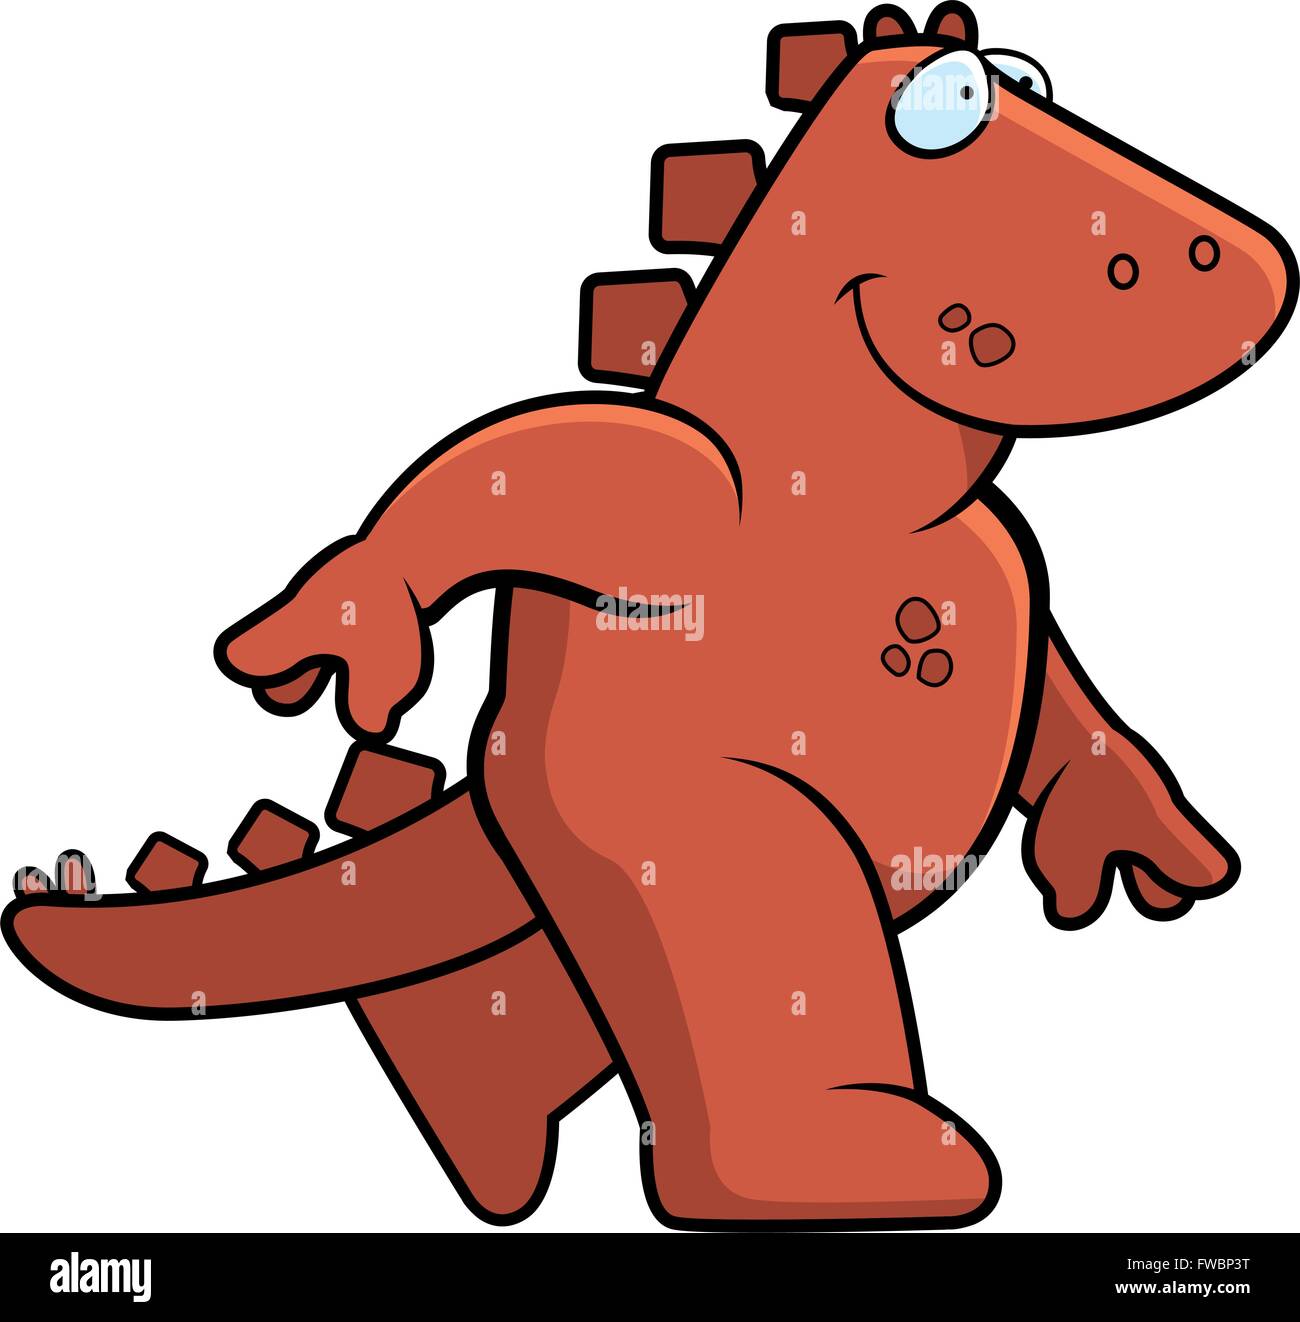 A Happy Cartoon Dinosaur Jumping And Smiling. Royalty Free SVG, Cliparts,  Vectors, and Stock Illustration. Image 26468966.